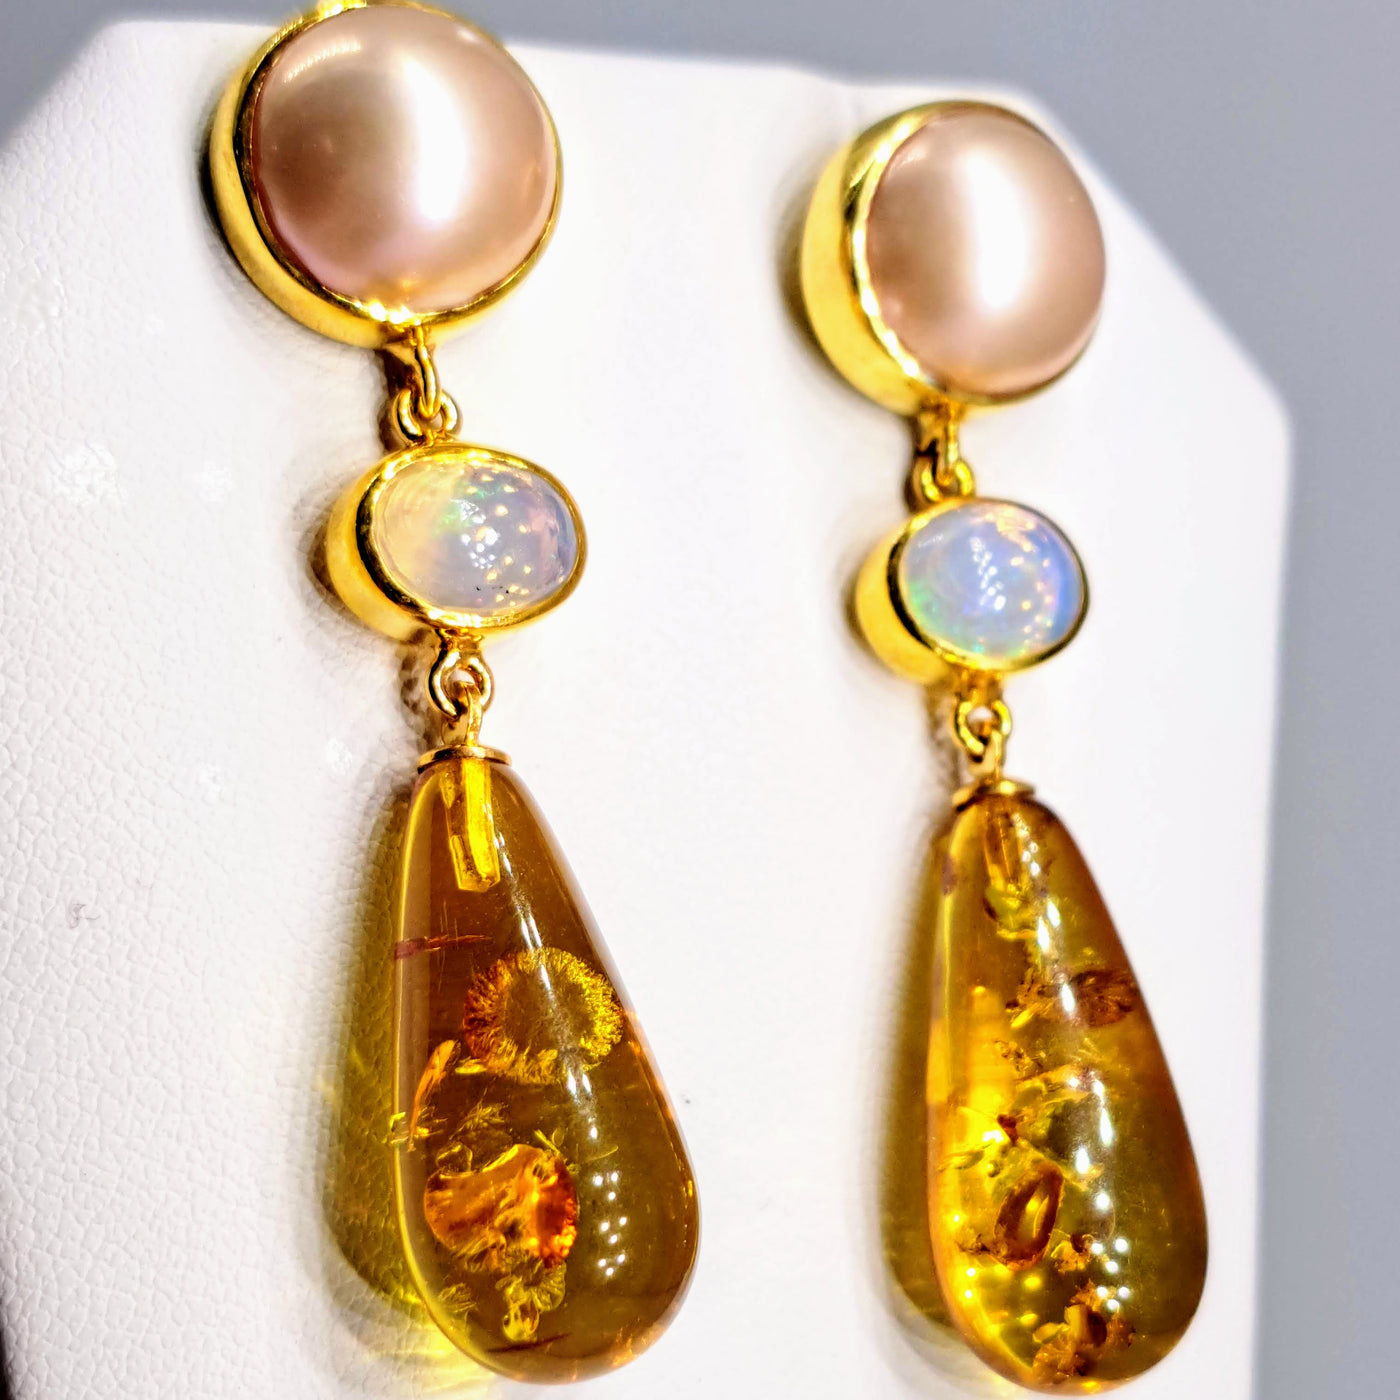 "Magic Hour" 2" Earrings - Pearl, Opal, Amber, 18K Gold Sterling